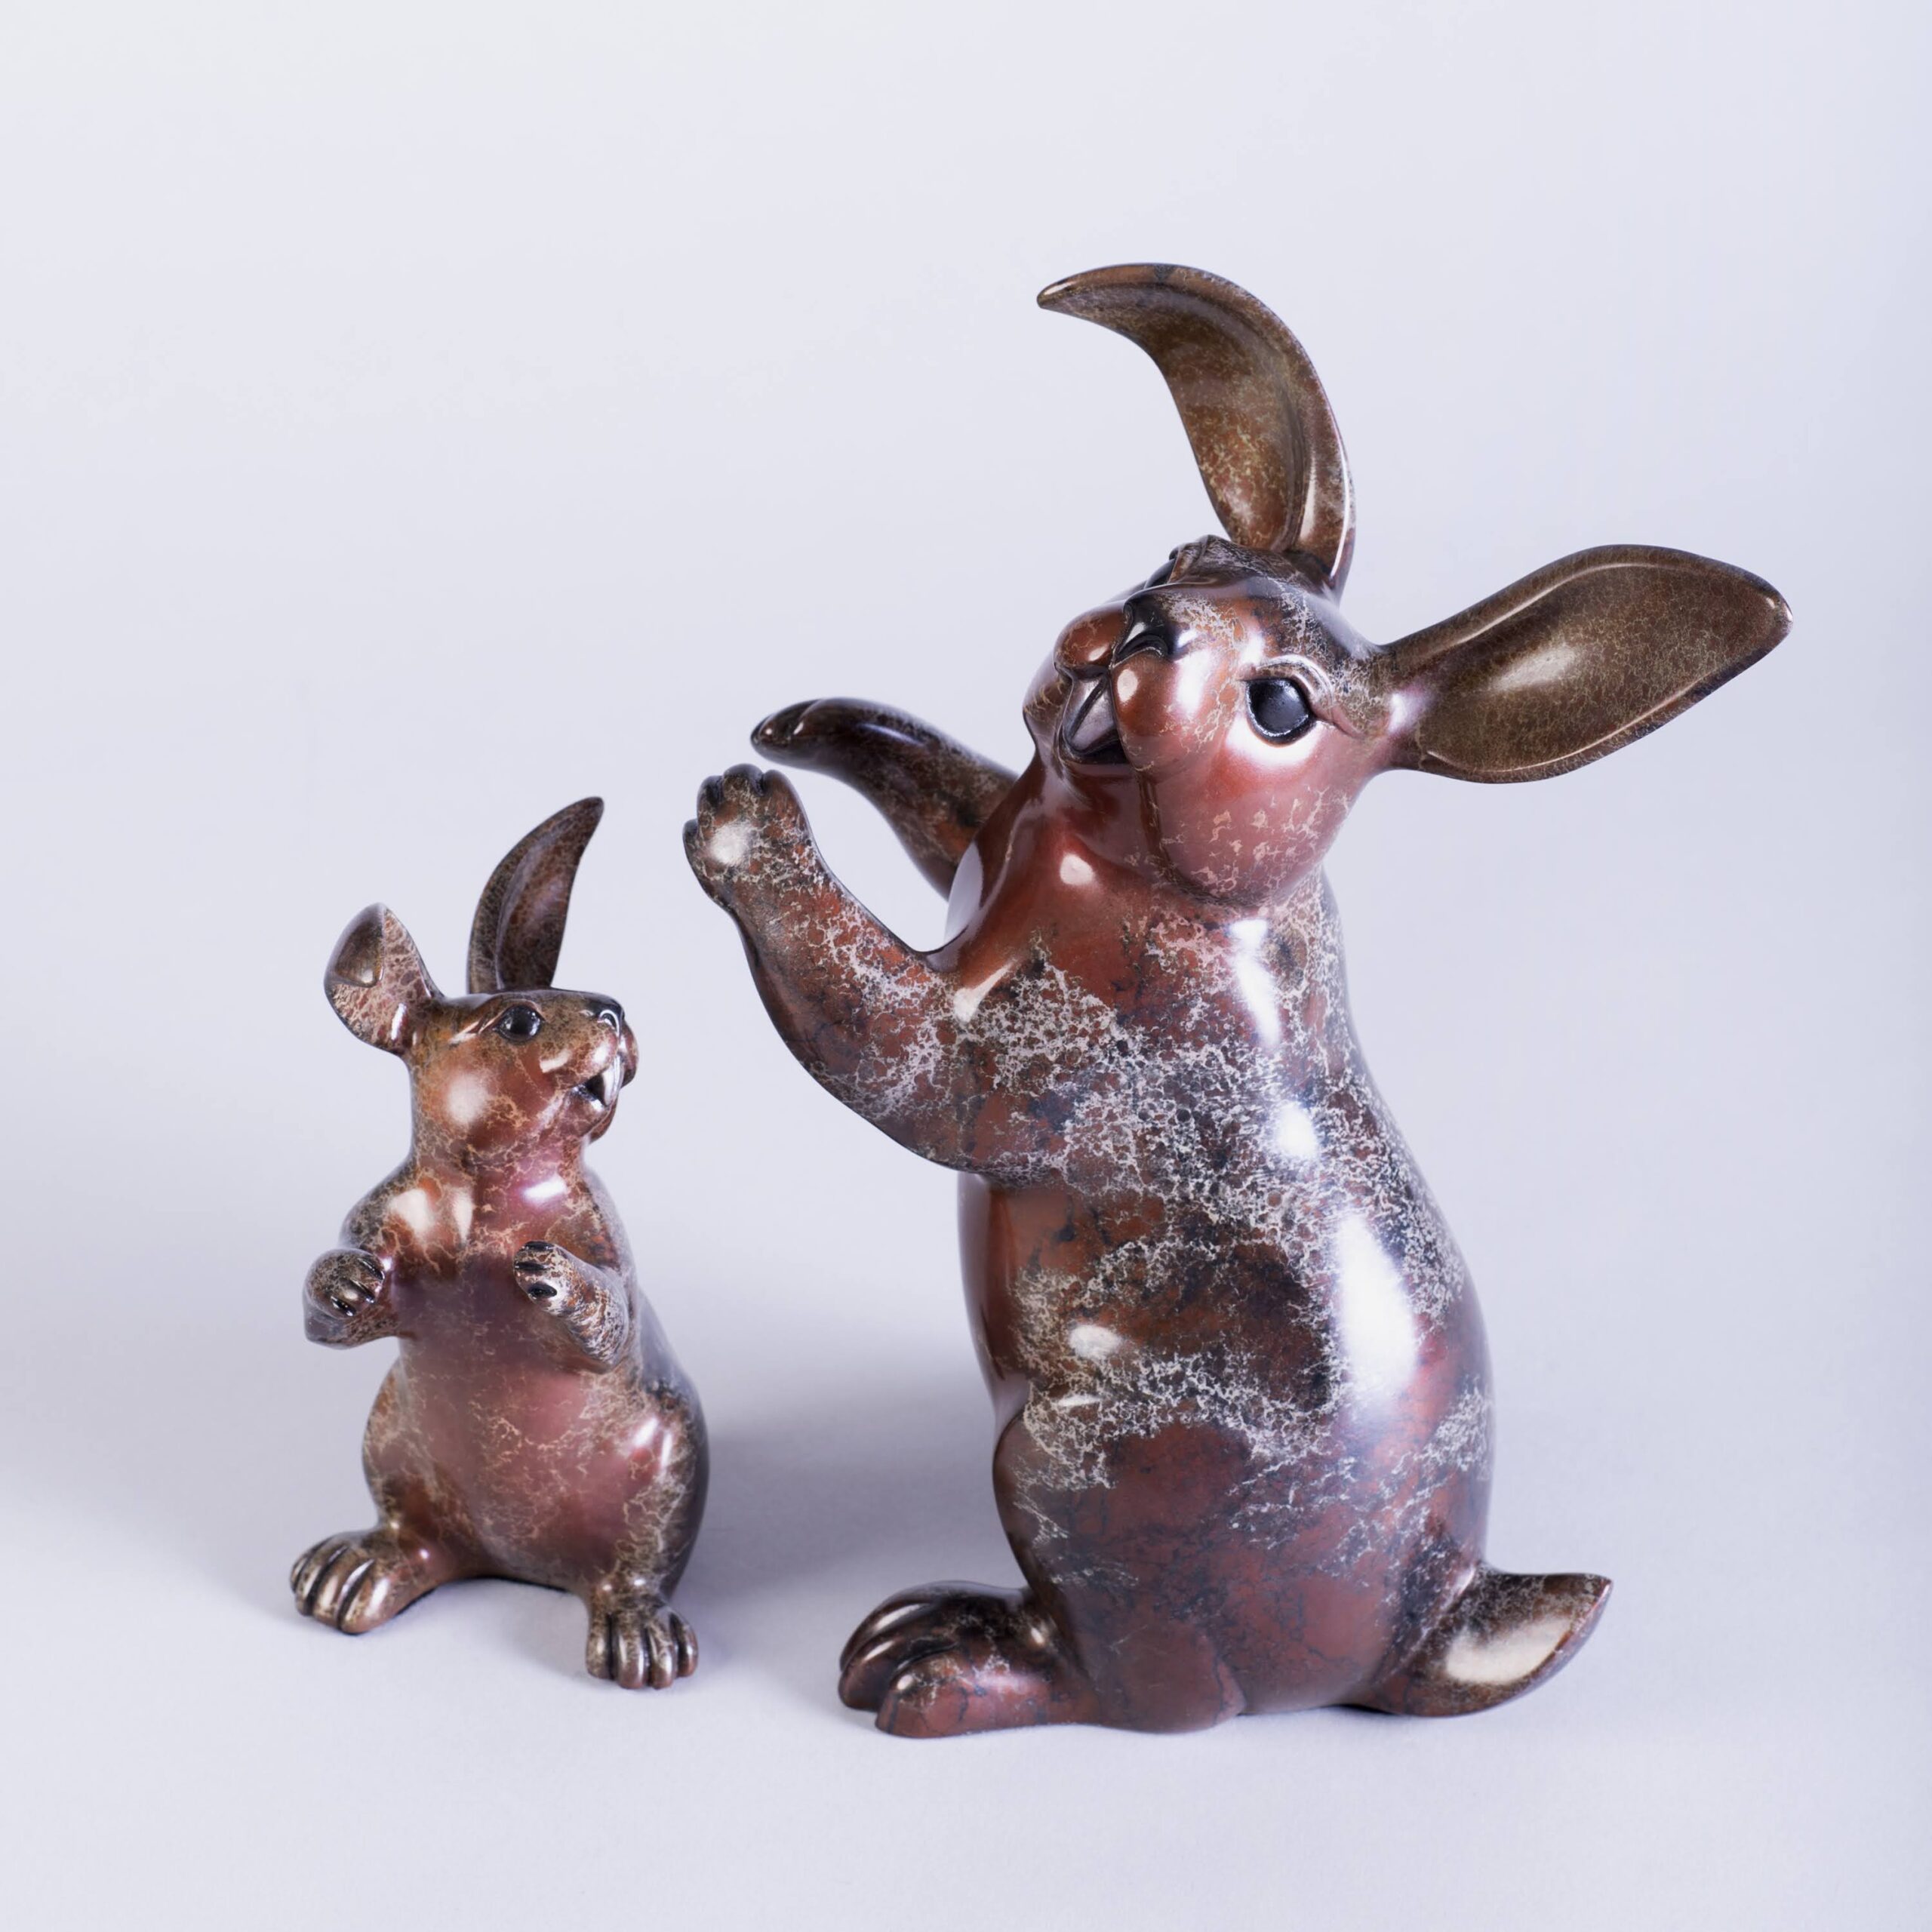 Easter Bunny Flopsy 4½" L x 3 ¾" W x 6" H & Easter Bunny Mopsy 7¾" L x 6½" W x 10" H